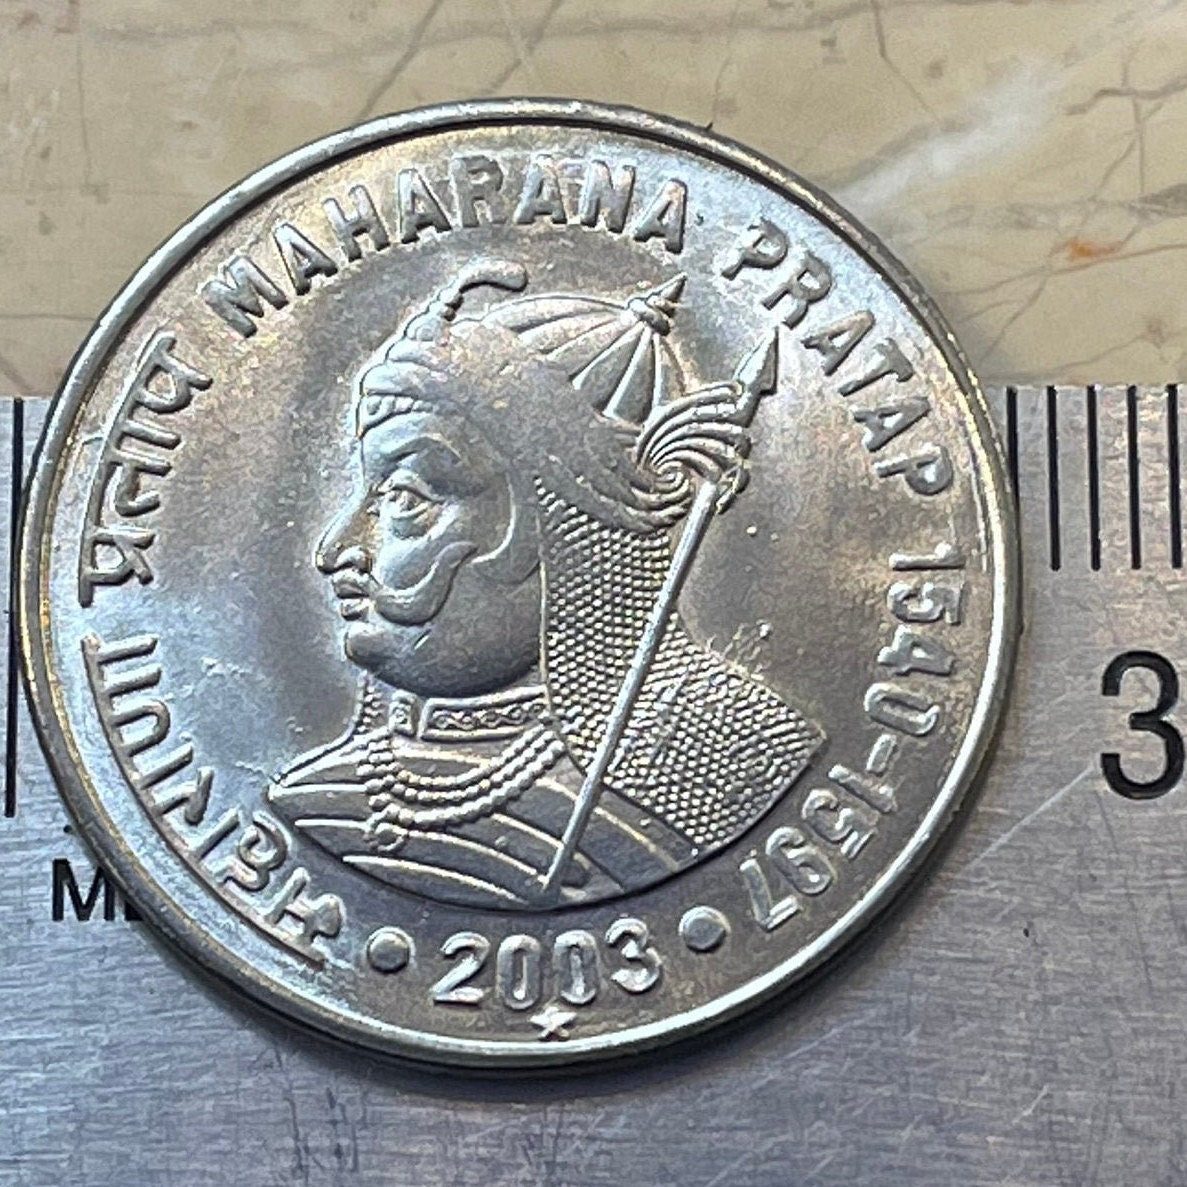 Ashoka Lion Capitol & Maharana Pratap 1 Rupee India Rajasthan Authentic Coin Money for Jewelry and Craft Making (Pratap Singh I)